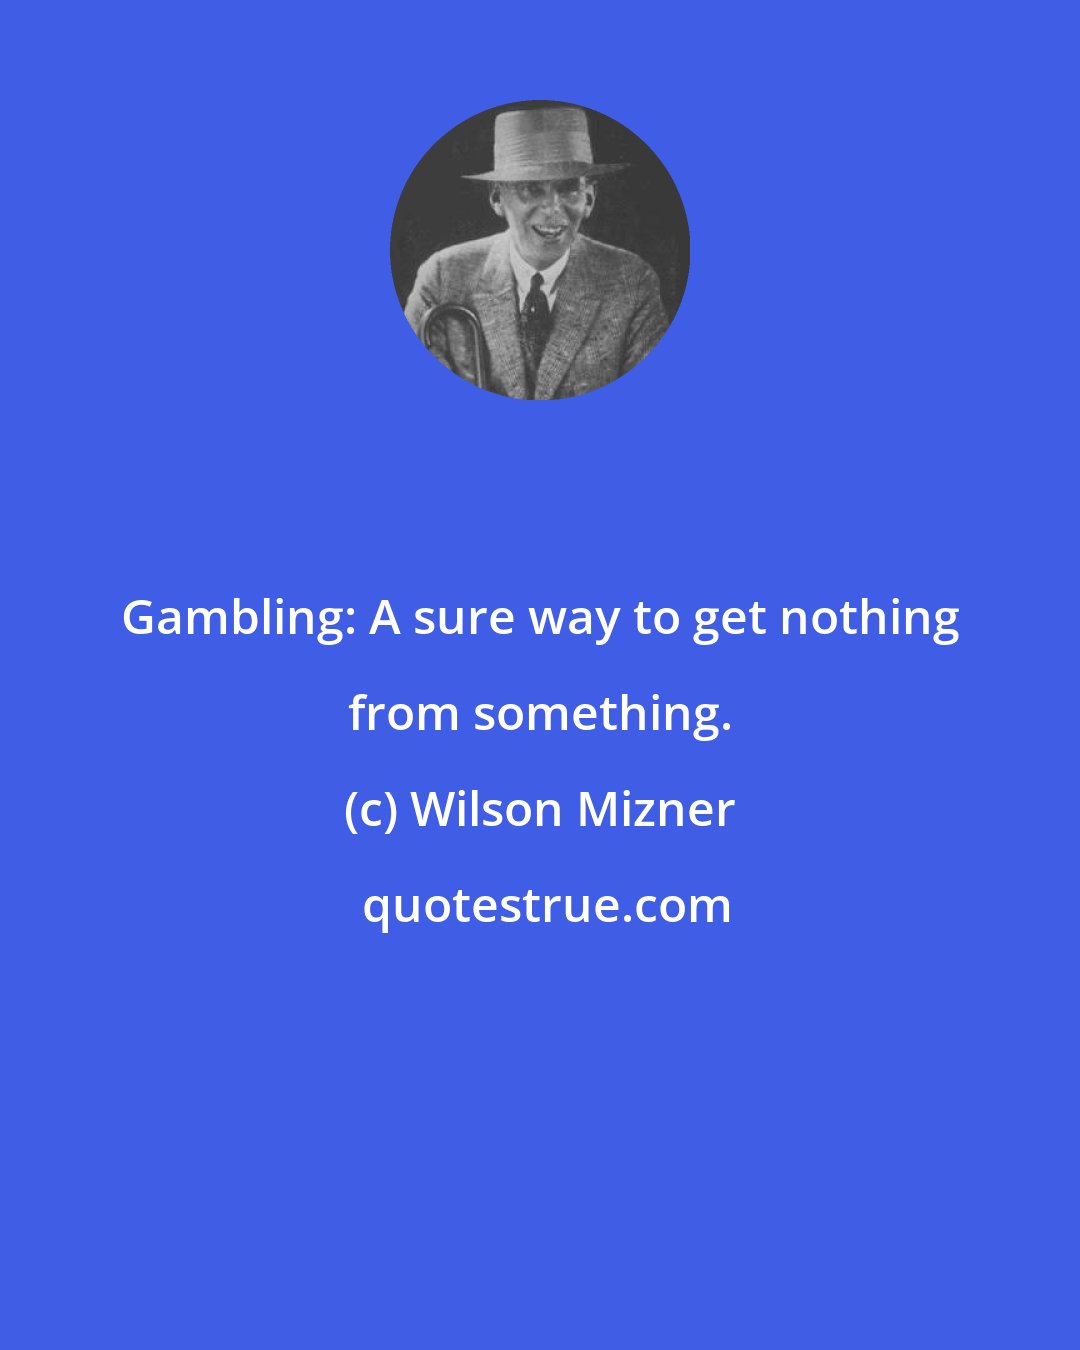 Wilson Mizner: Gambling: A sure way to get nothing from something.